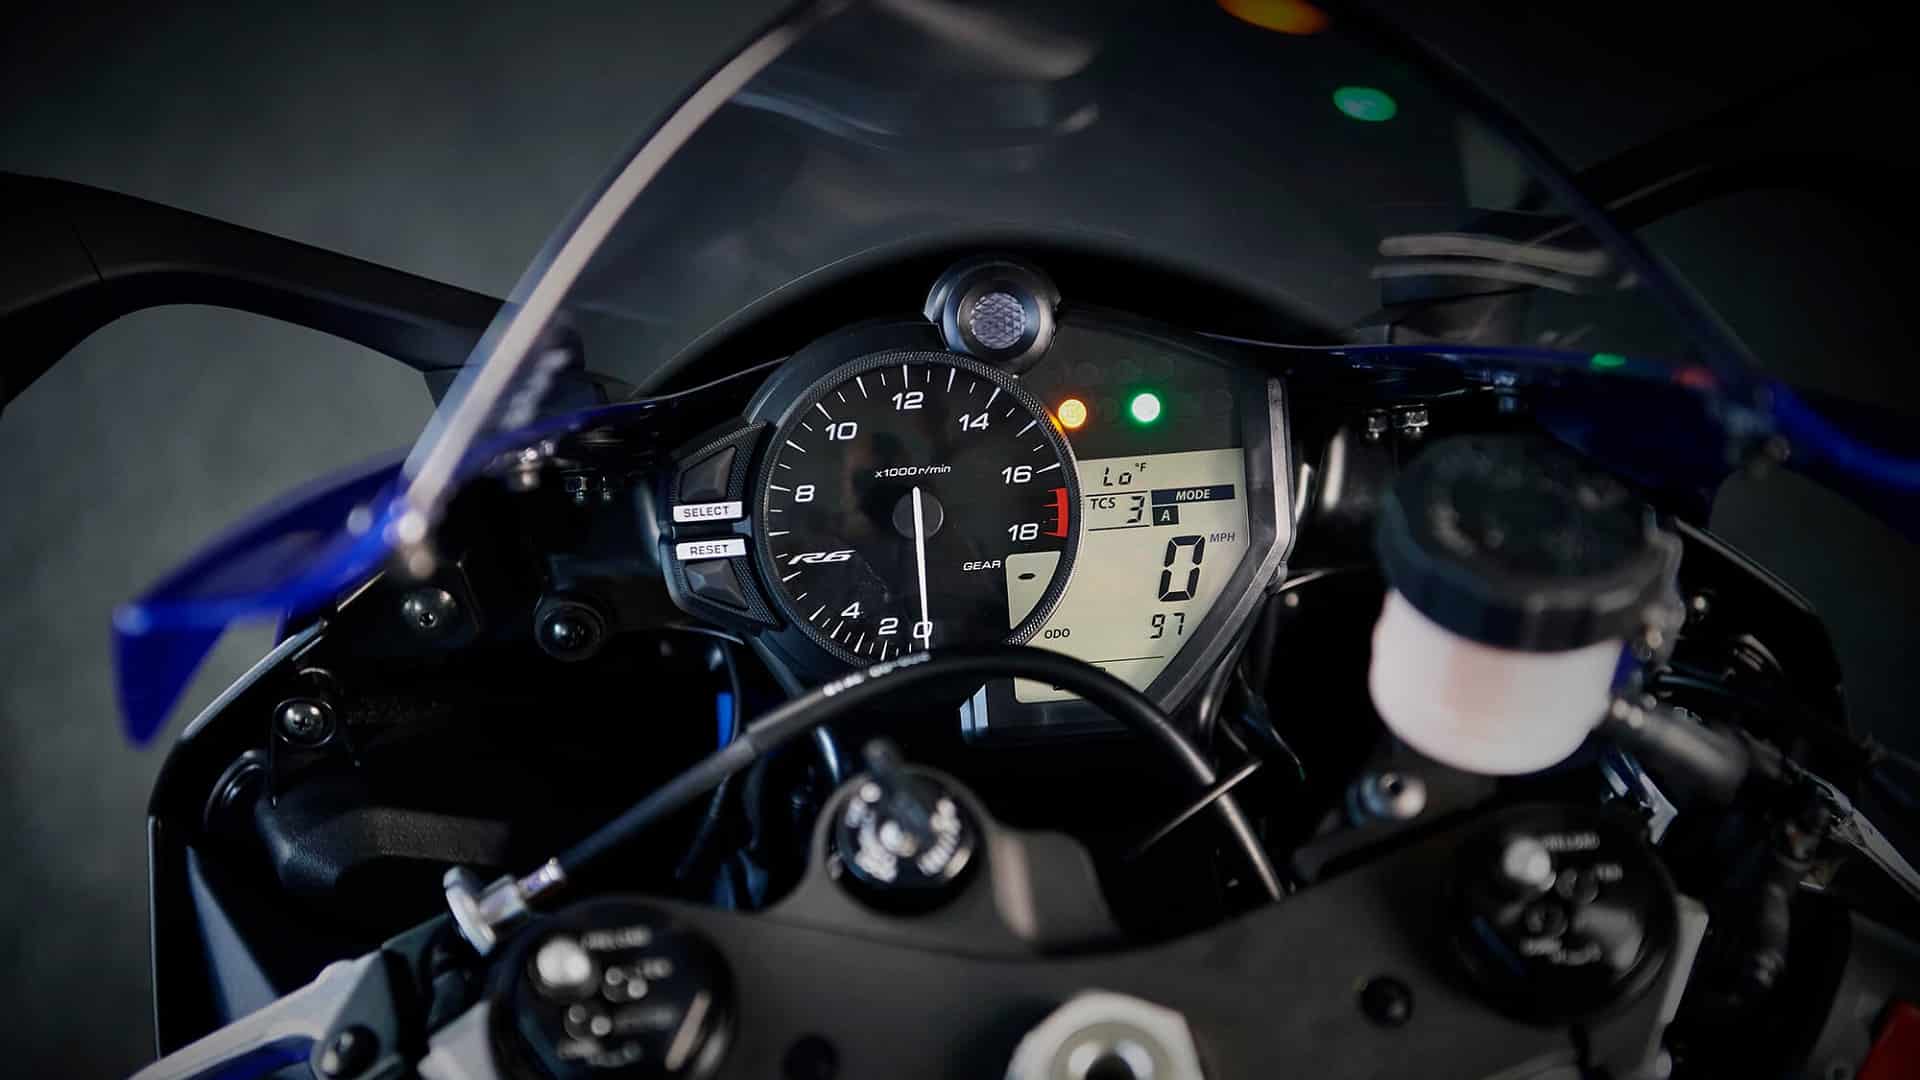 Best Motorcycle Gear Indicator Reviews